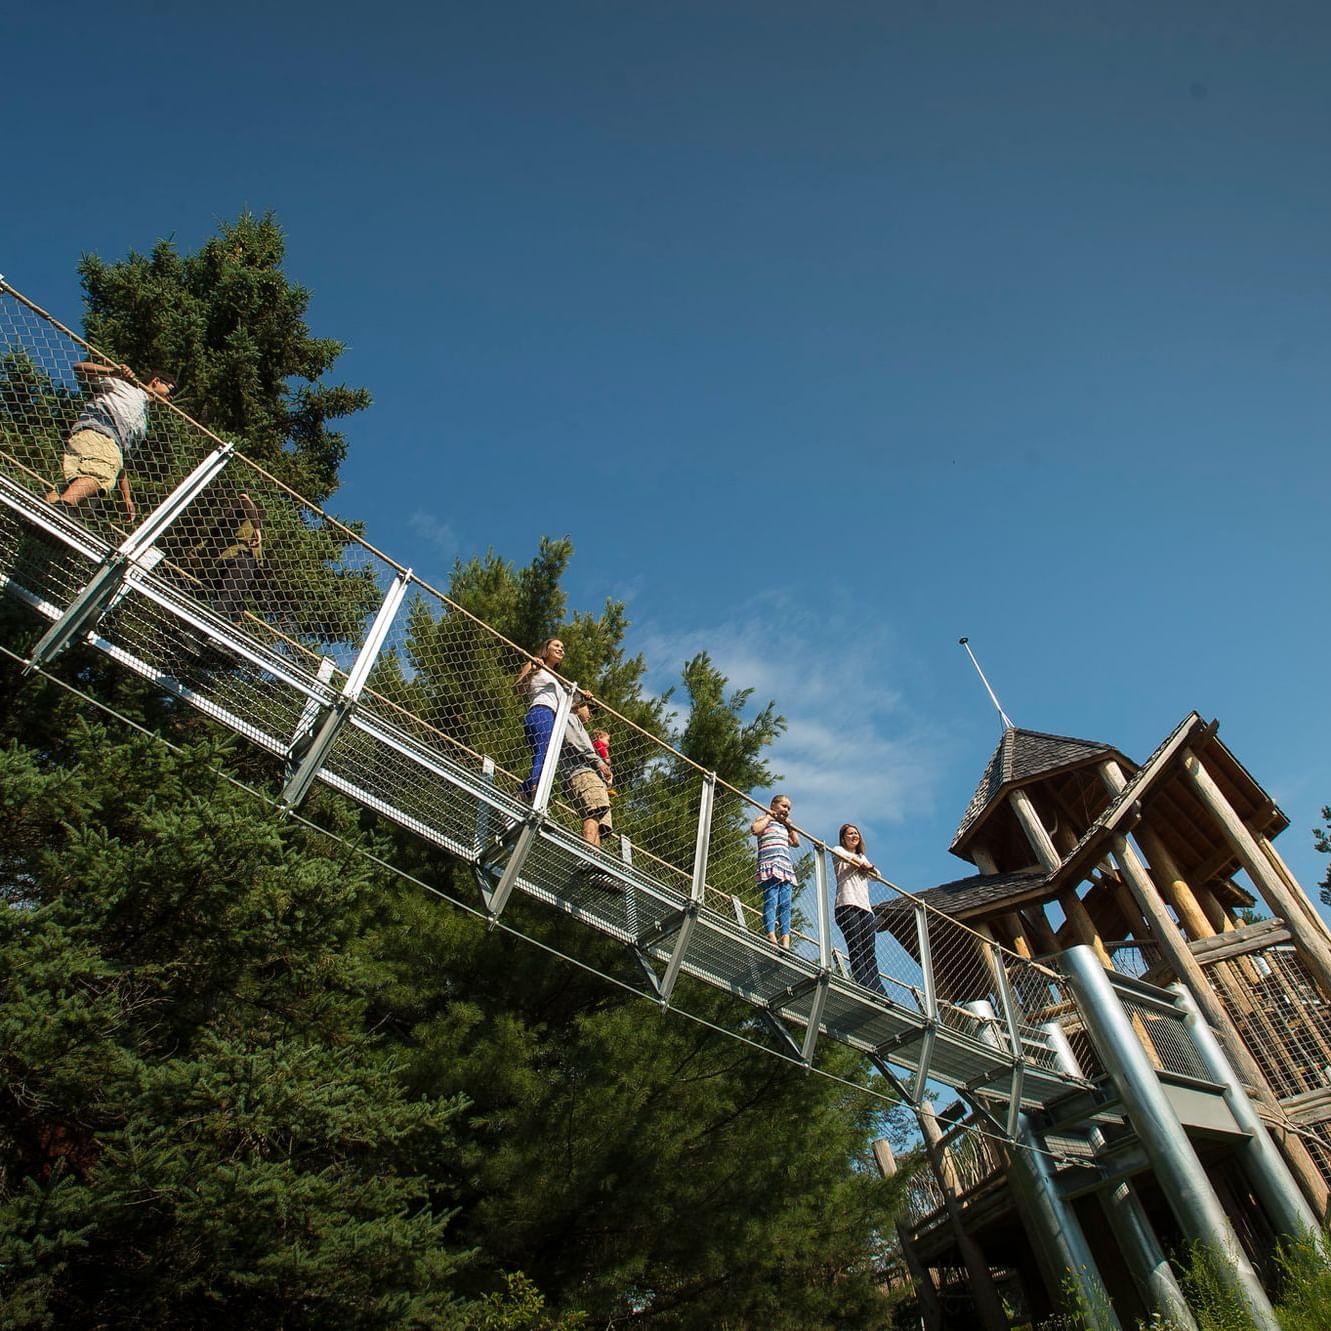 People on a metal bridge at the Wild Center near High Peaks Resort